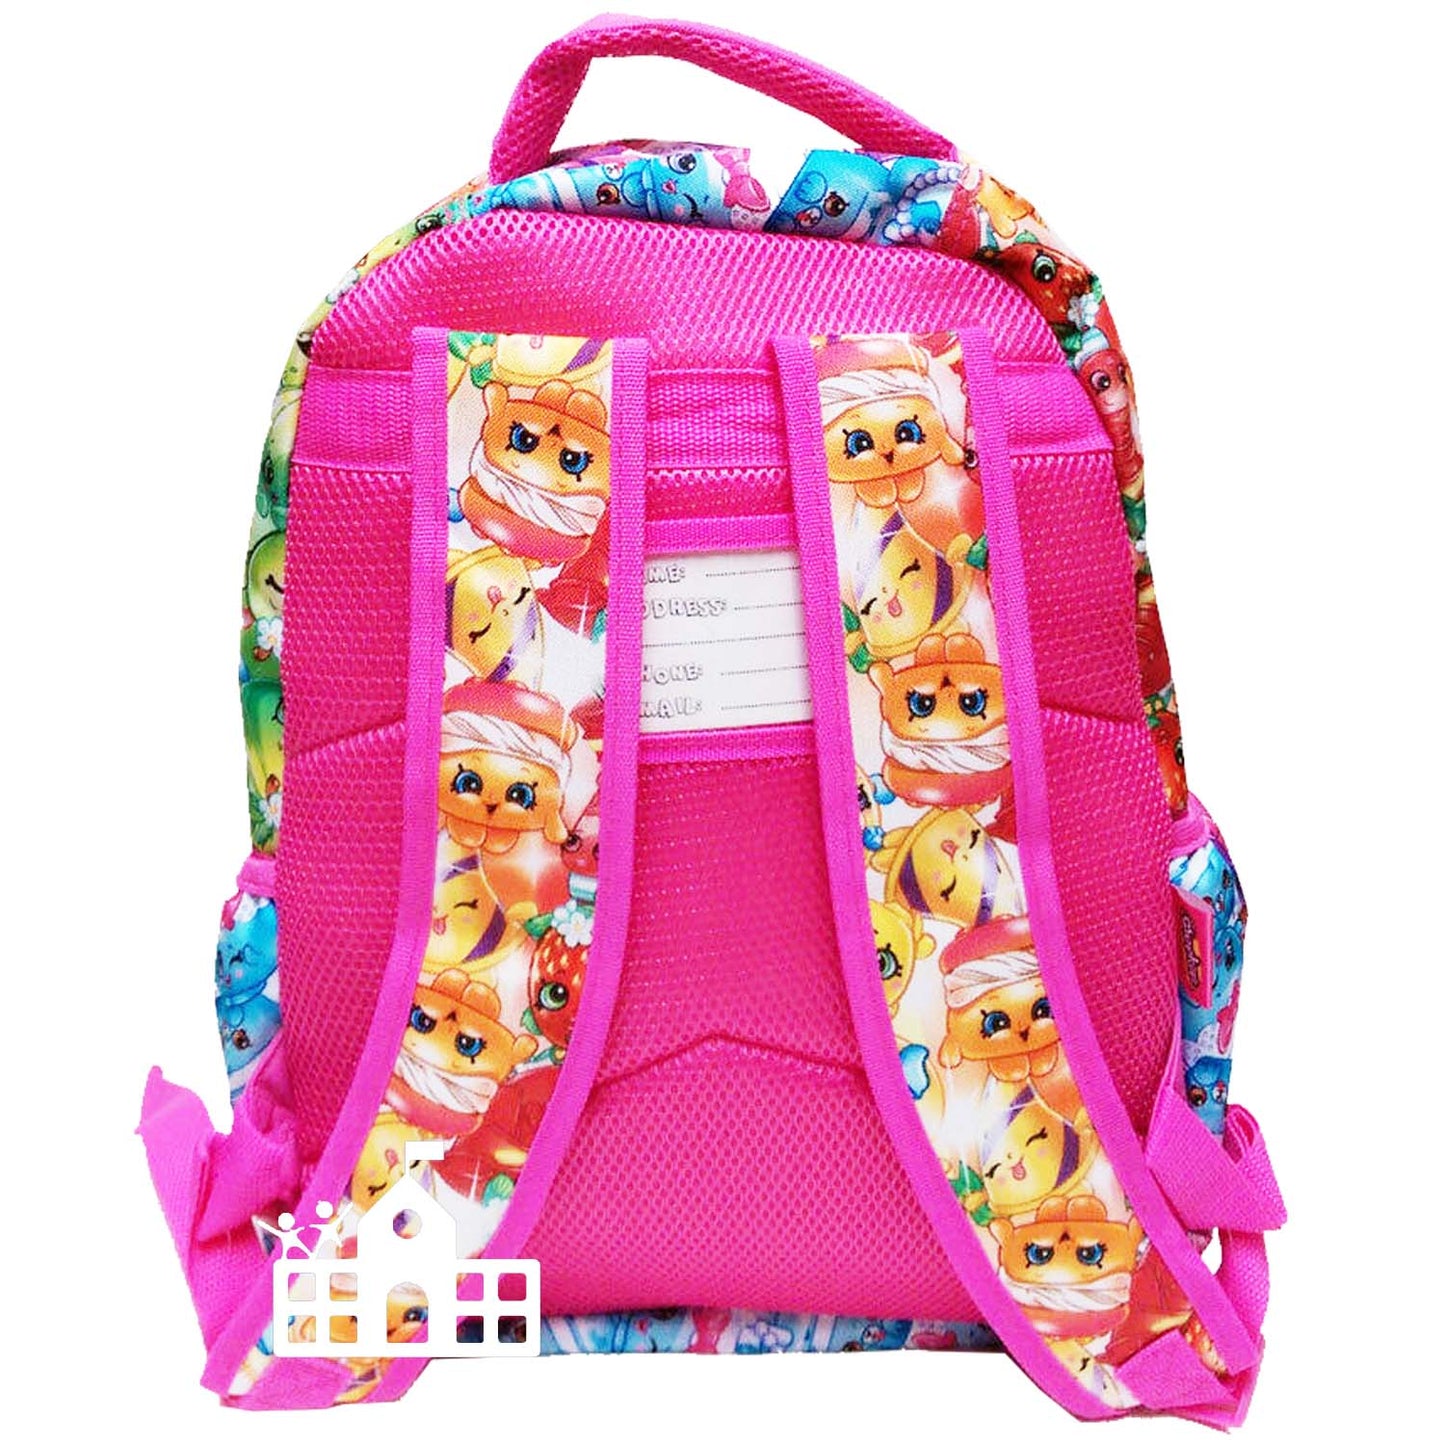 SHOPKINS 16-inch BACKPACK GIRLS BOOK BAG ALL PRINT Bonus Carry Case Pink